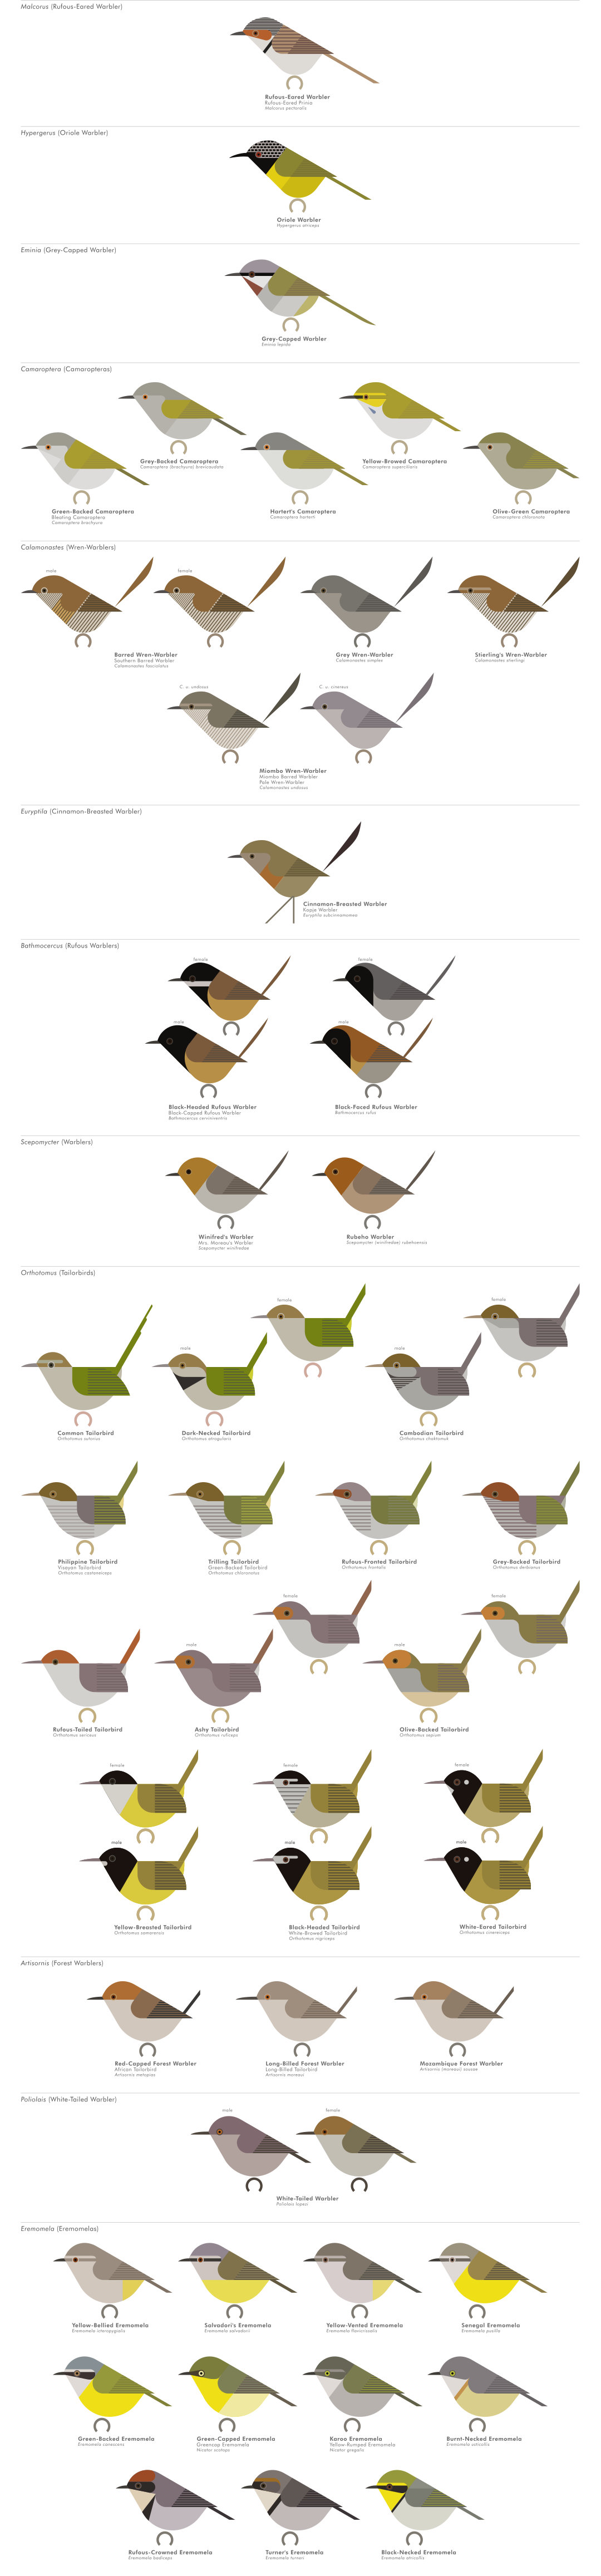 scott partridge - AVE - avian vector encyclopedia - cisticolas etc - bird vector art